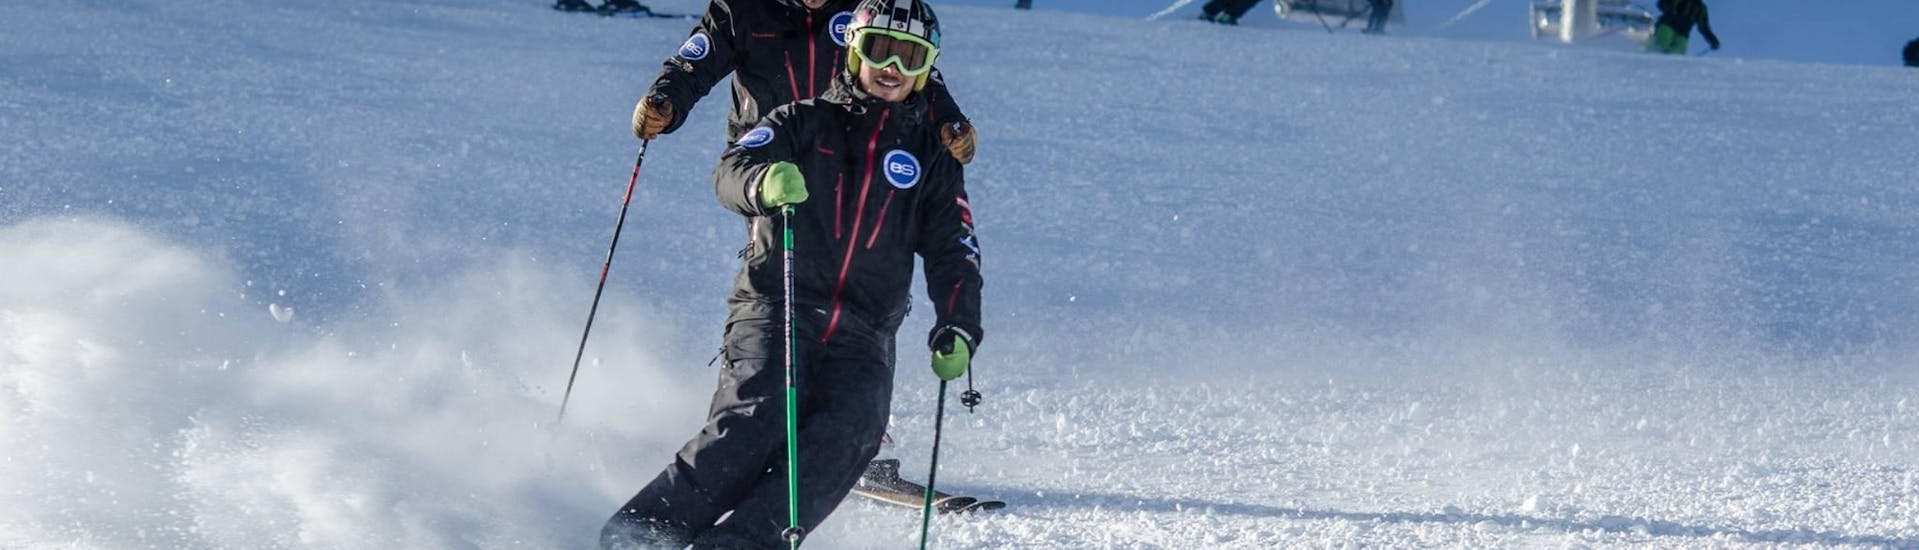 Teen Ski Lessons "Freeski" (11-17 y.) for Advanced Skiers.